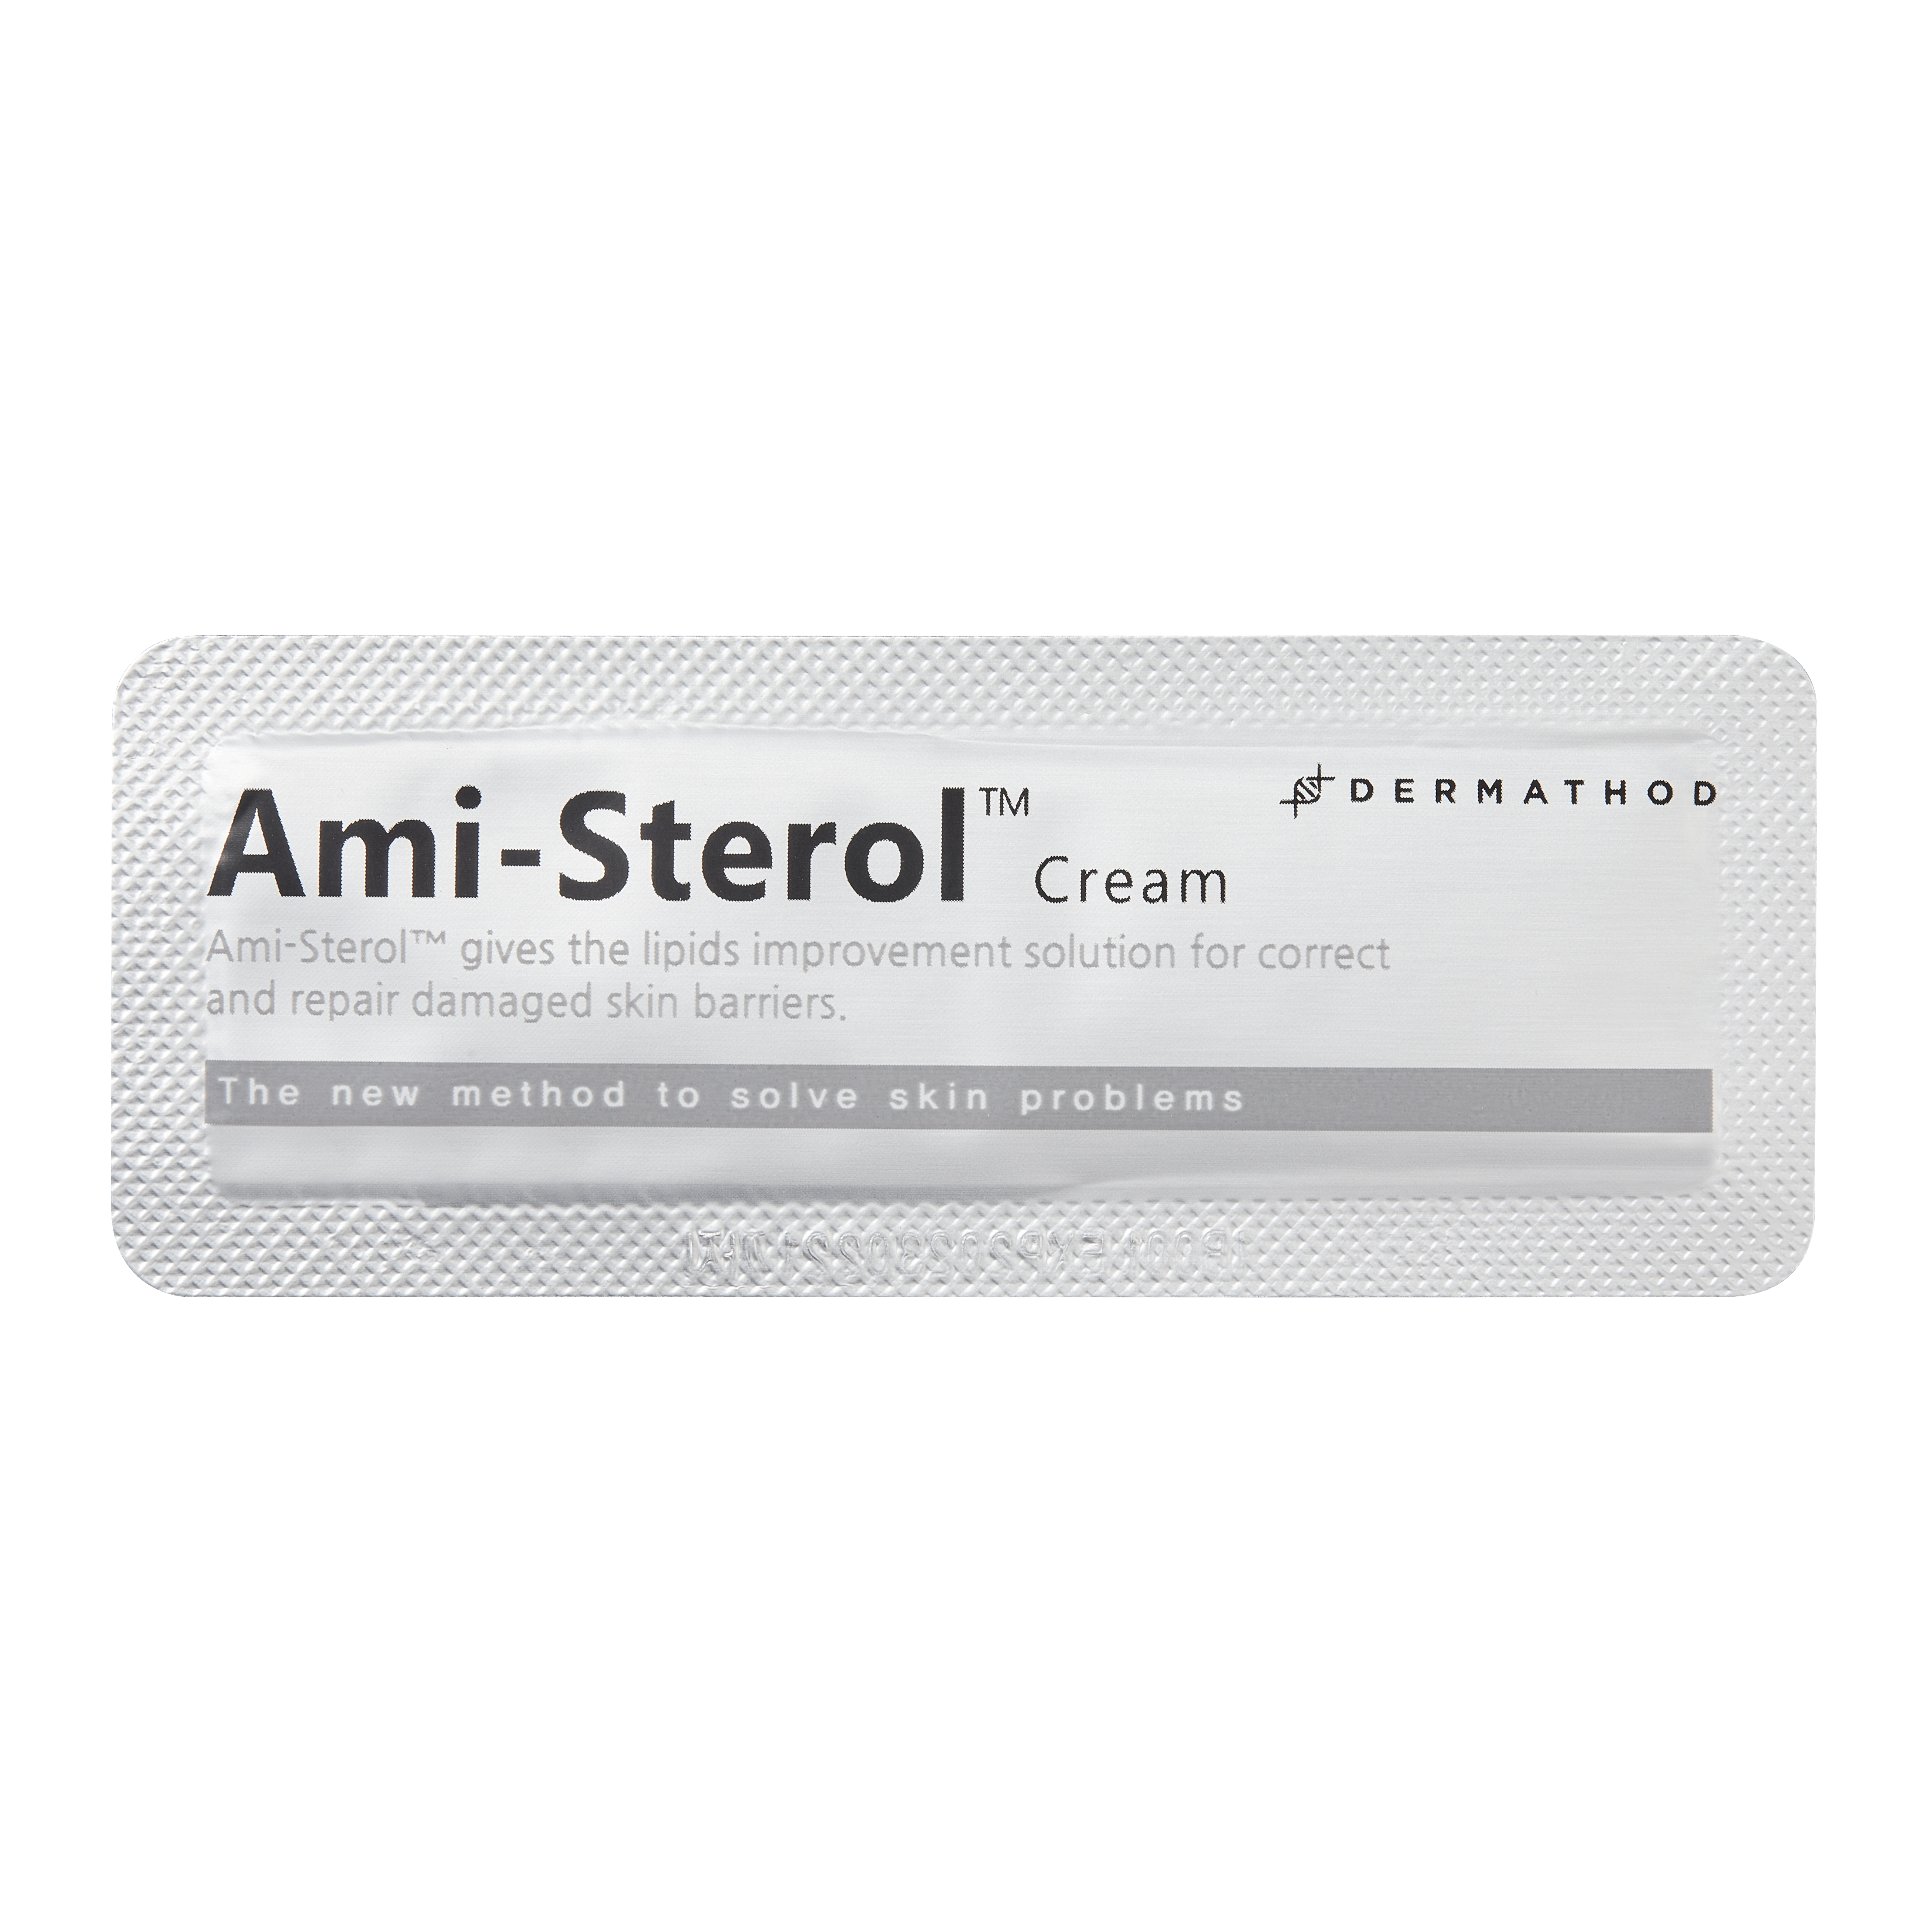 SAMPLE Dermathod Ami-Sterol Cream